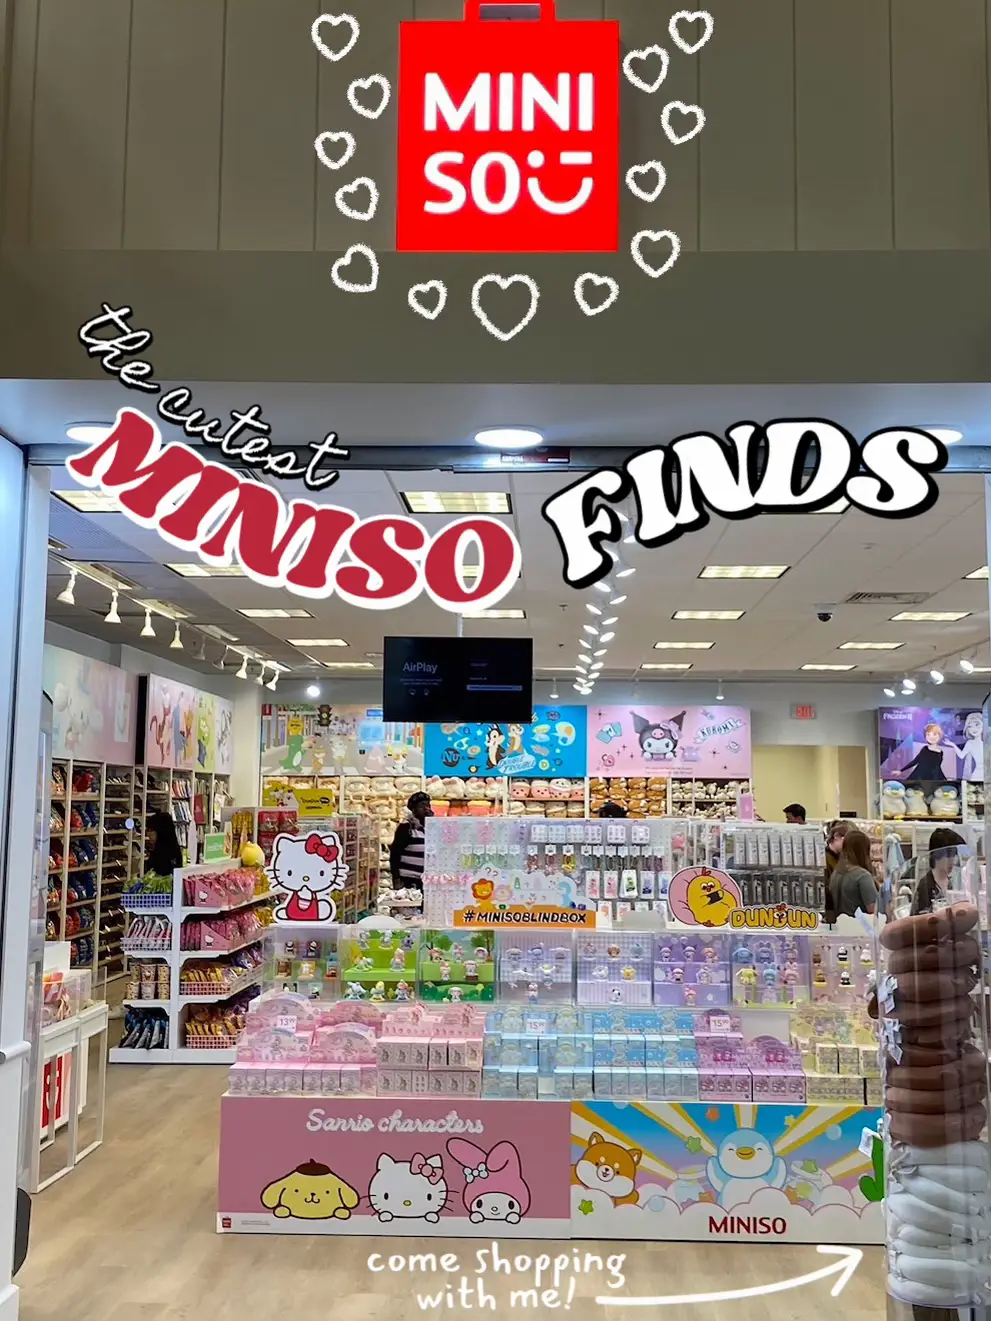 let’s go shopping @ miniso!! 🛍🛒 | Gallery posted by sam ♡ | Lemon8